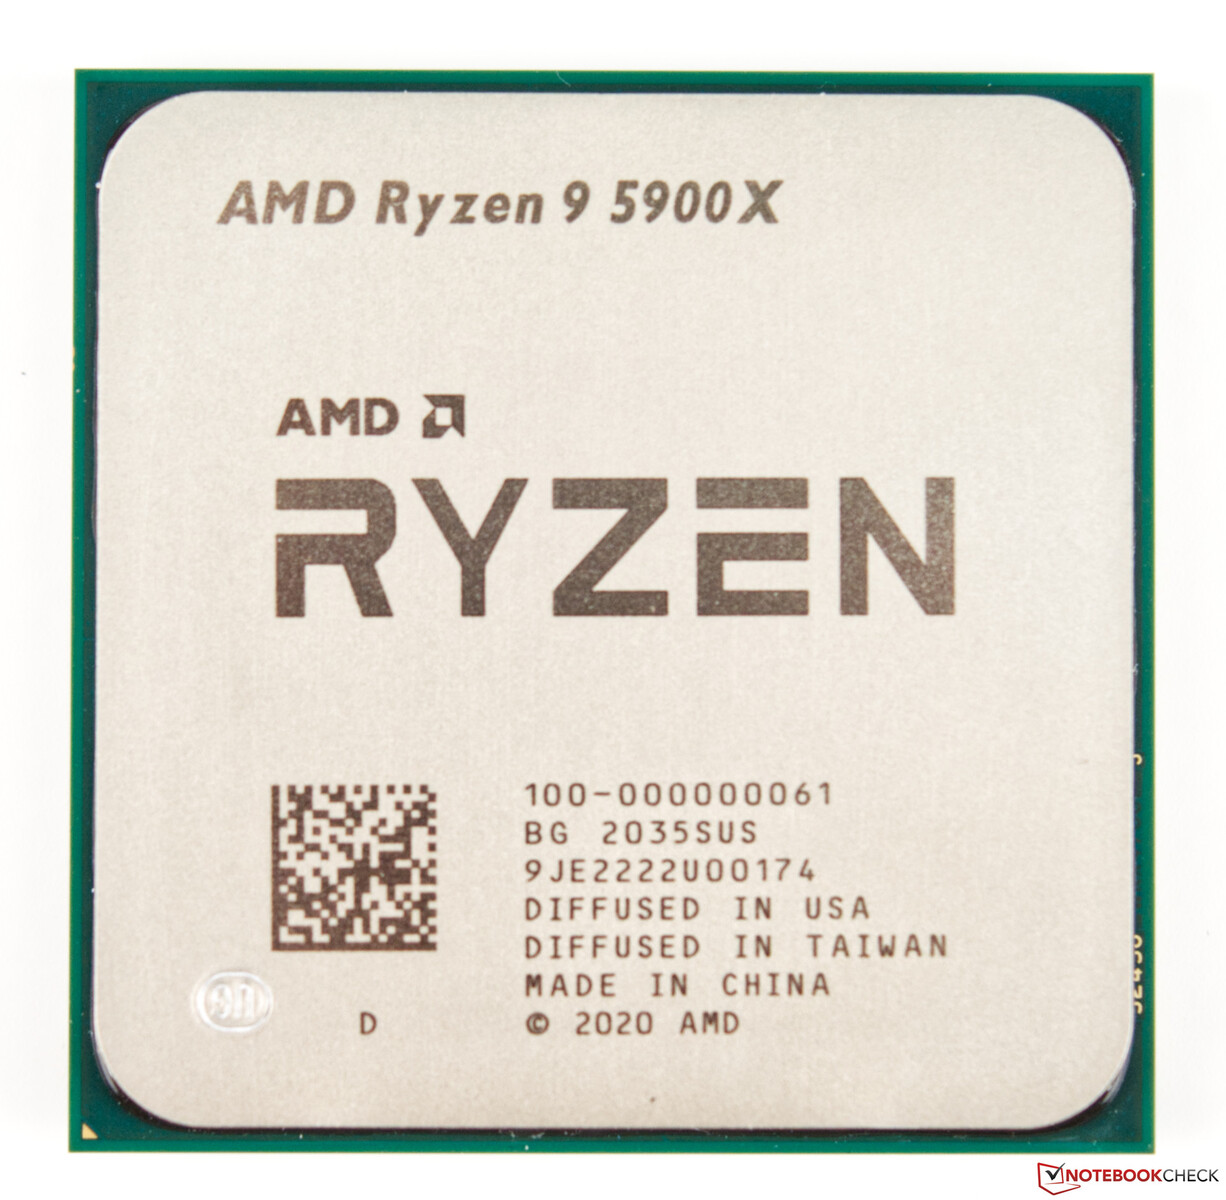 Test de l'AMD Radeon RX 6600 : un GPU de bureau du milieu de gamme